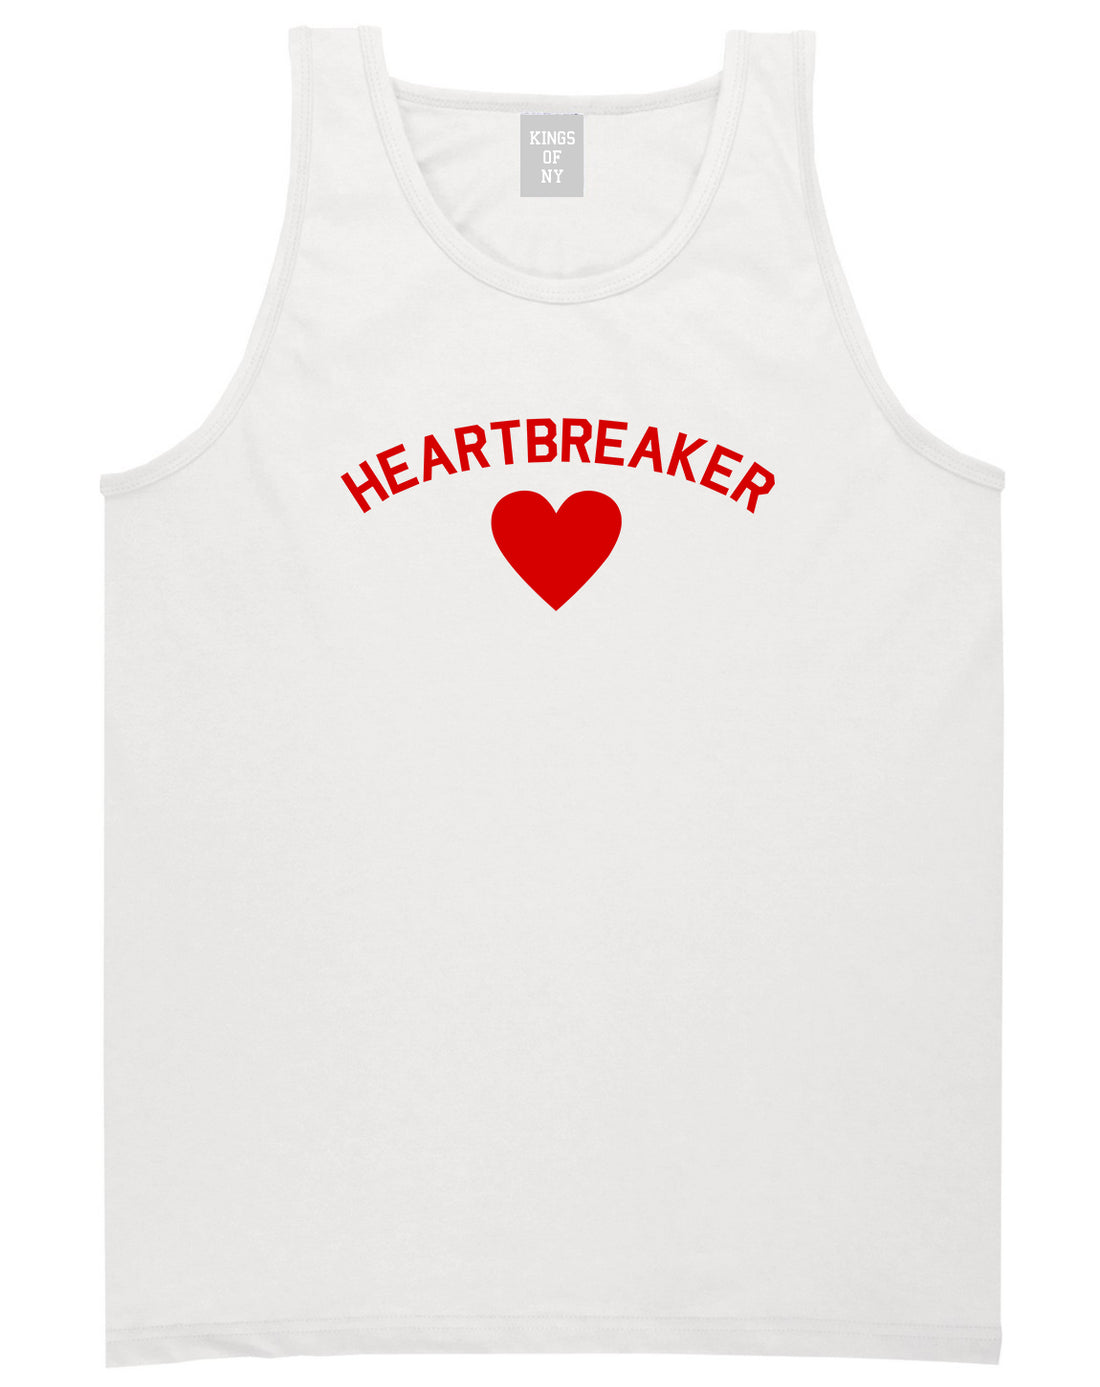 Heartbreaker Valentines Day Mens Tank Top Shirt White